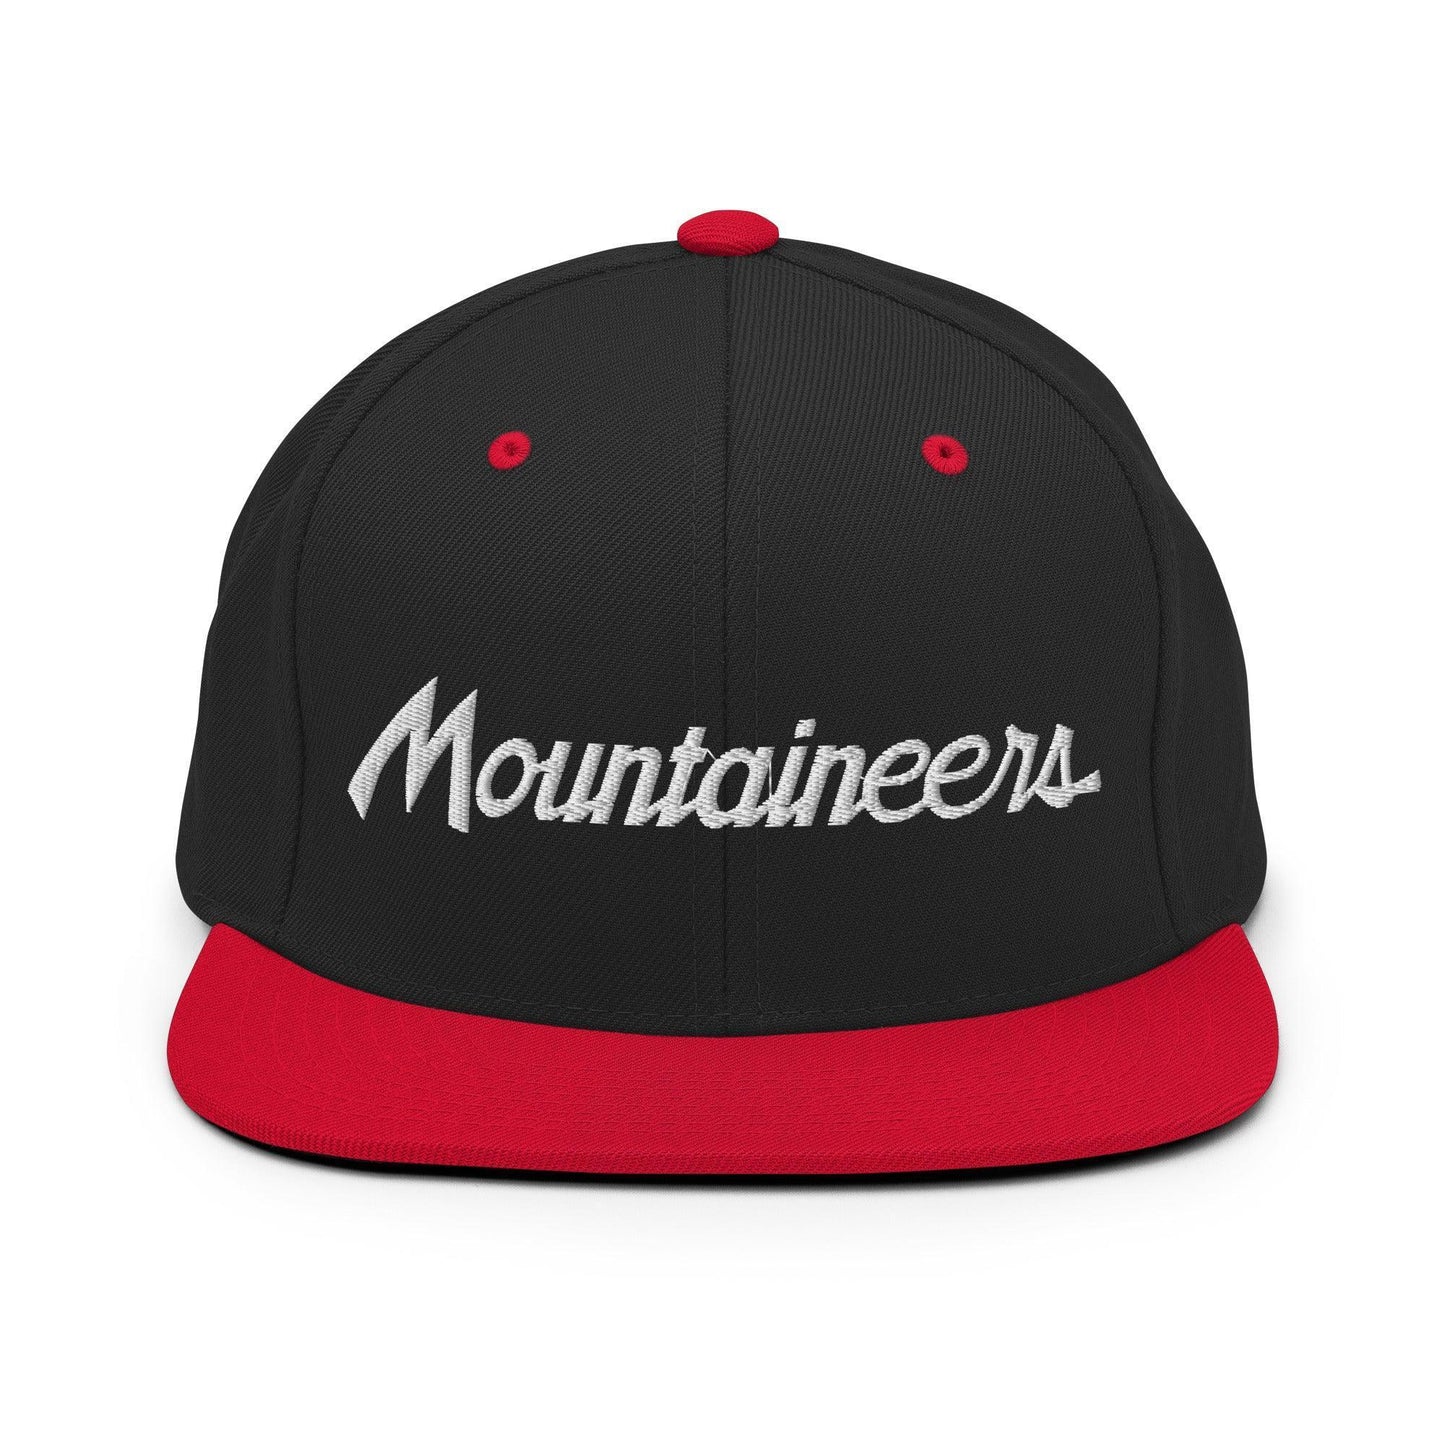 Mountaineers School Mascot Script Snapback Hat Black/ Red